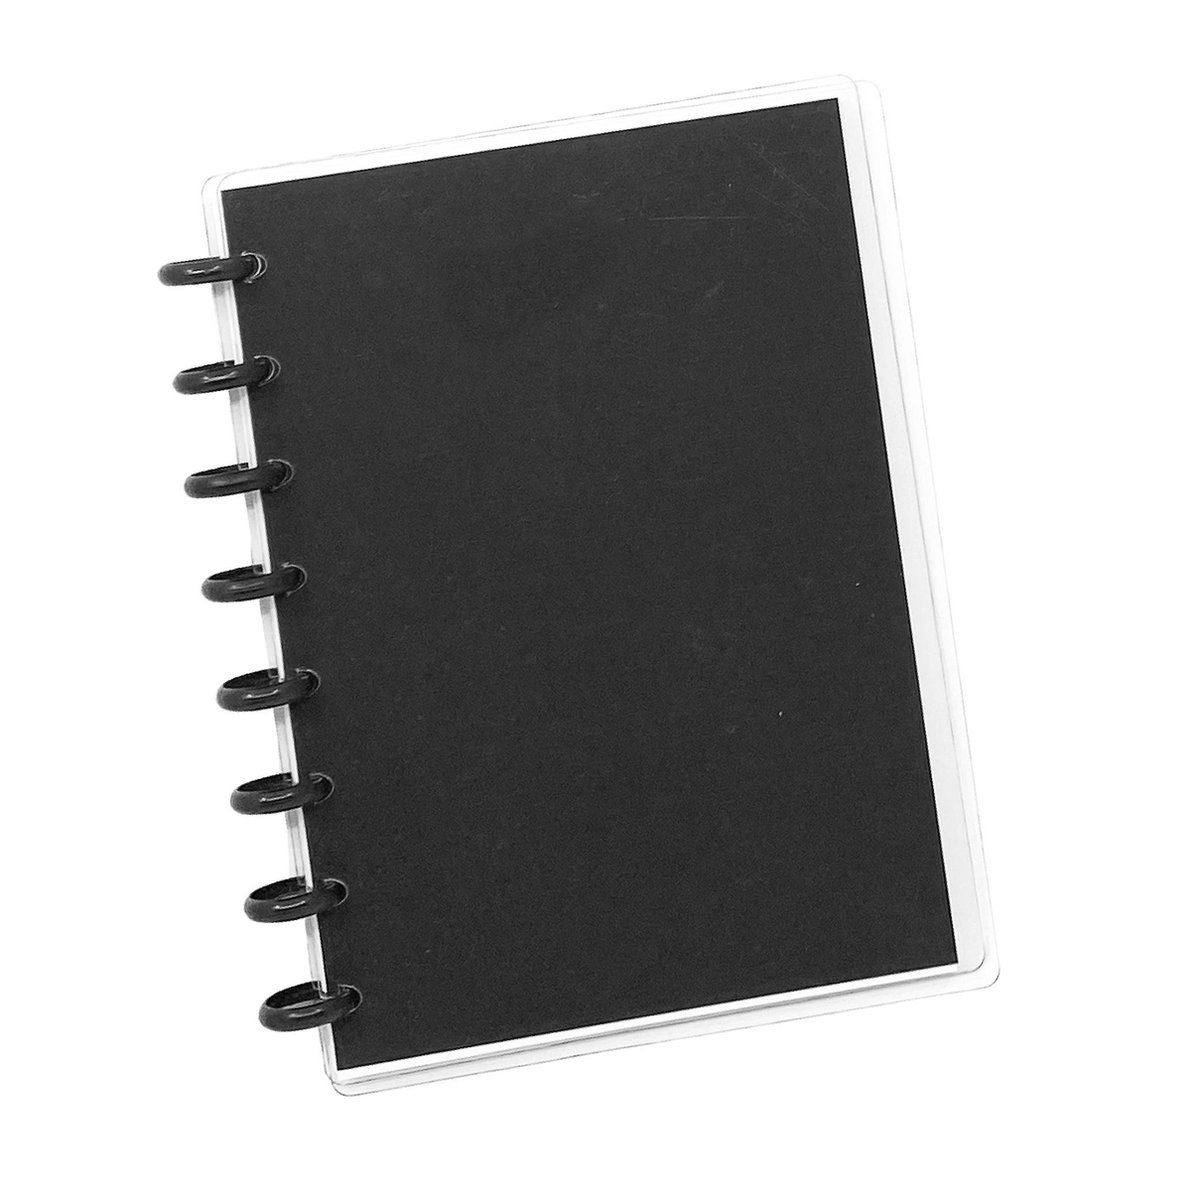 ZODY SHOP - Zody Journal Notitieboek Chrystal Clear - Zwart - Bullet Journal A5 - Modulair notitieboek, agenda, planner - 90 grams crème papier